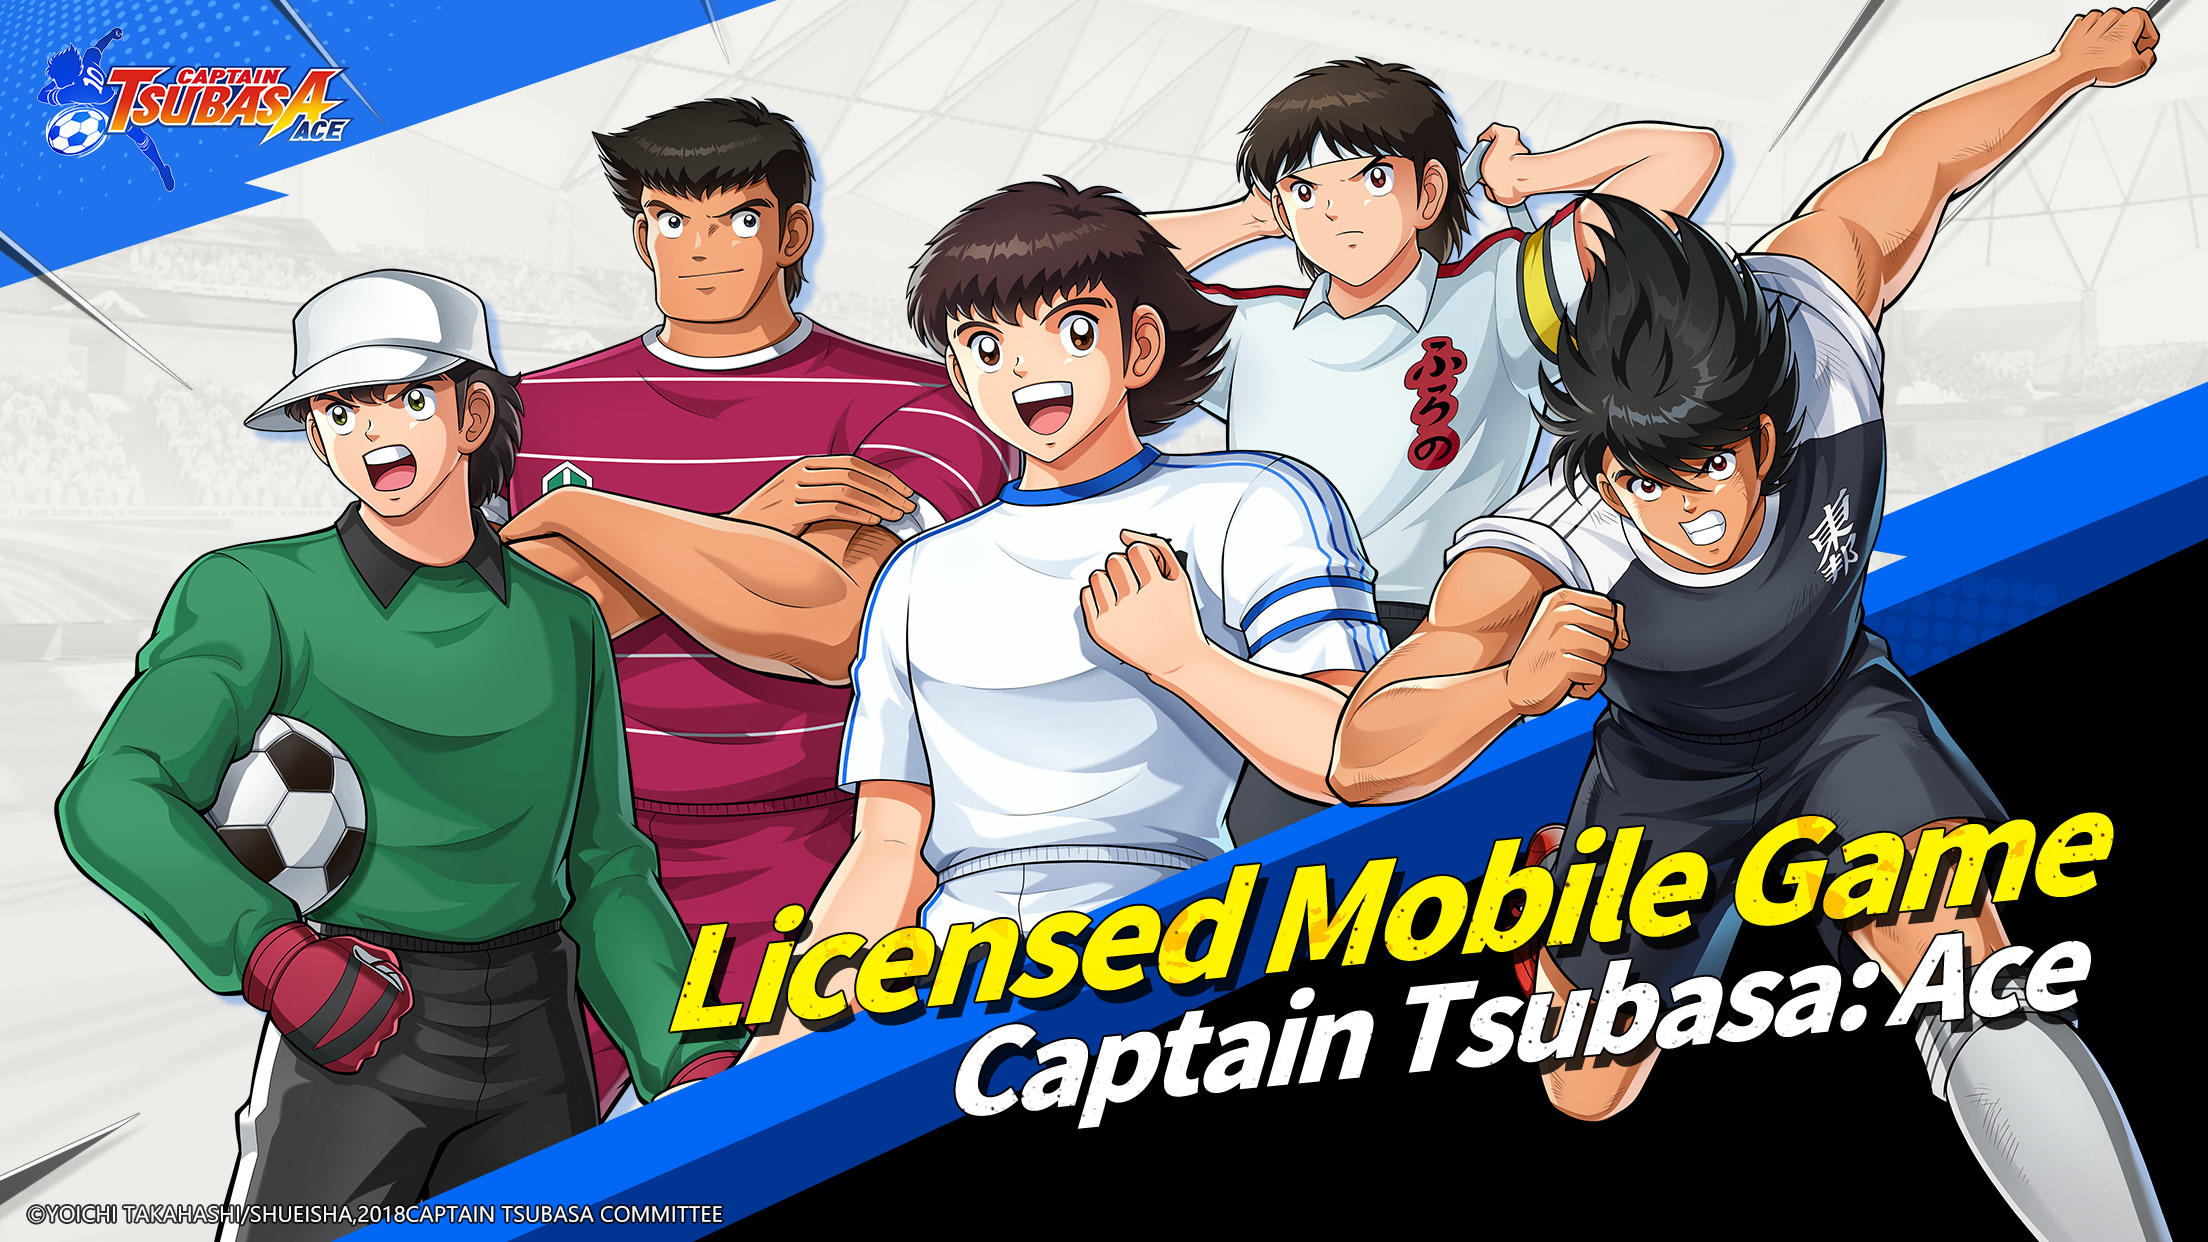 download Captain Tsubasa Ace free